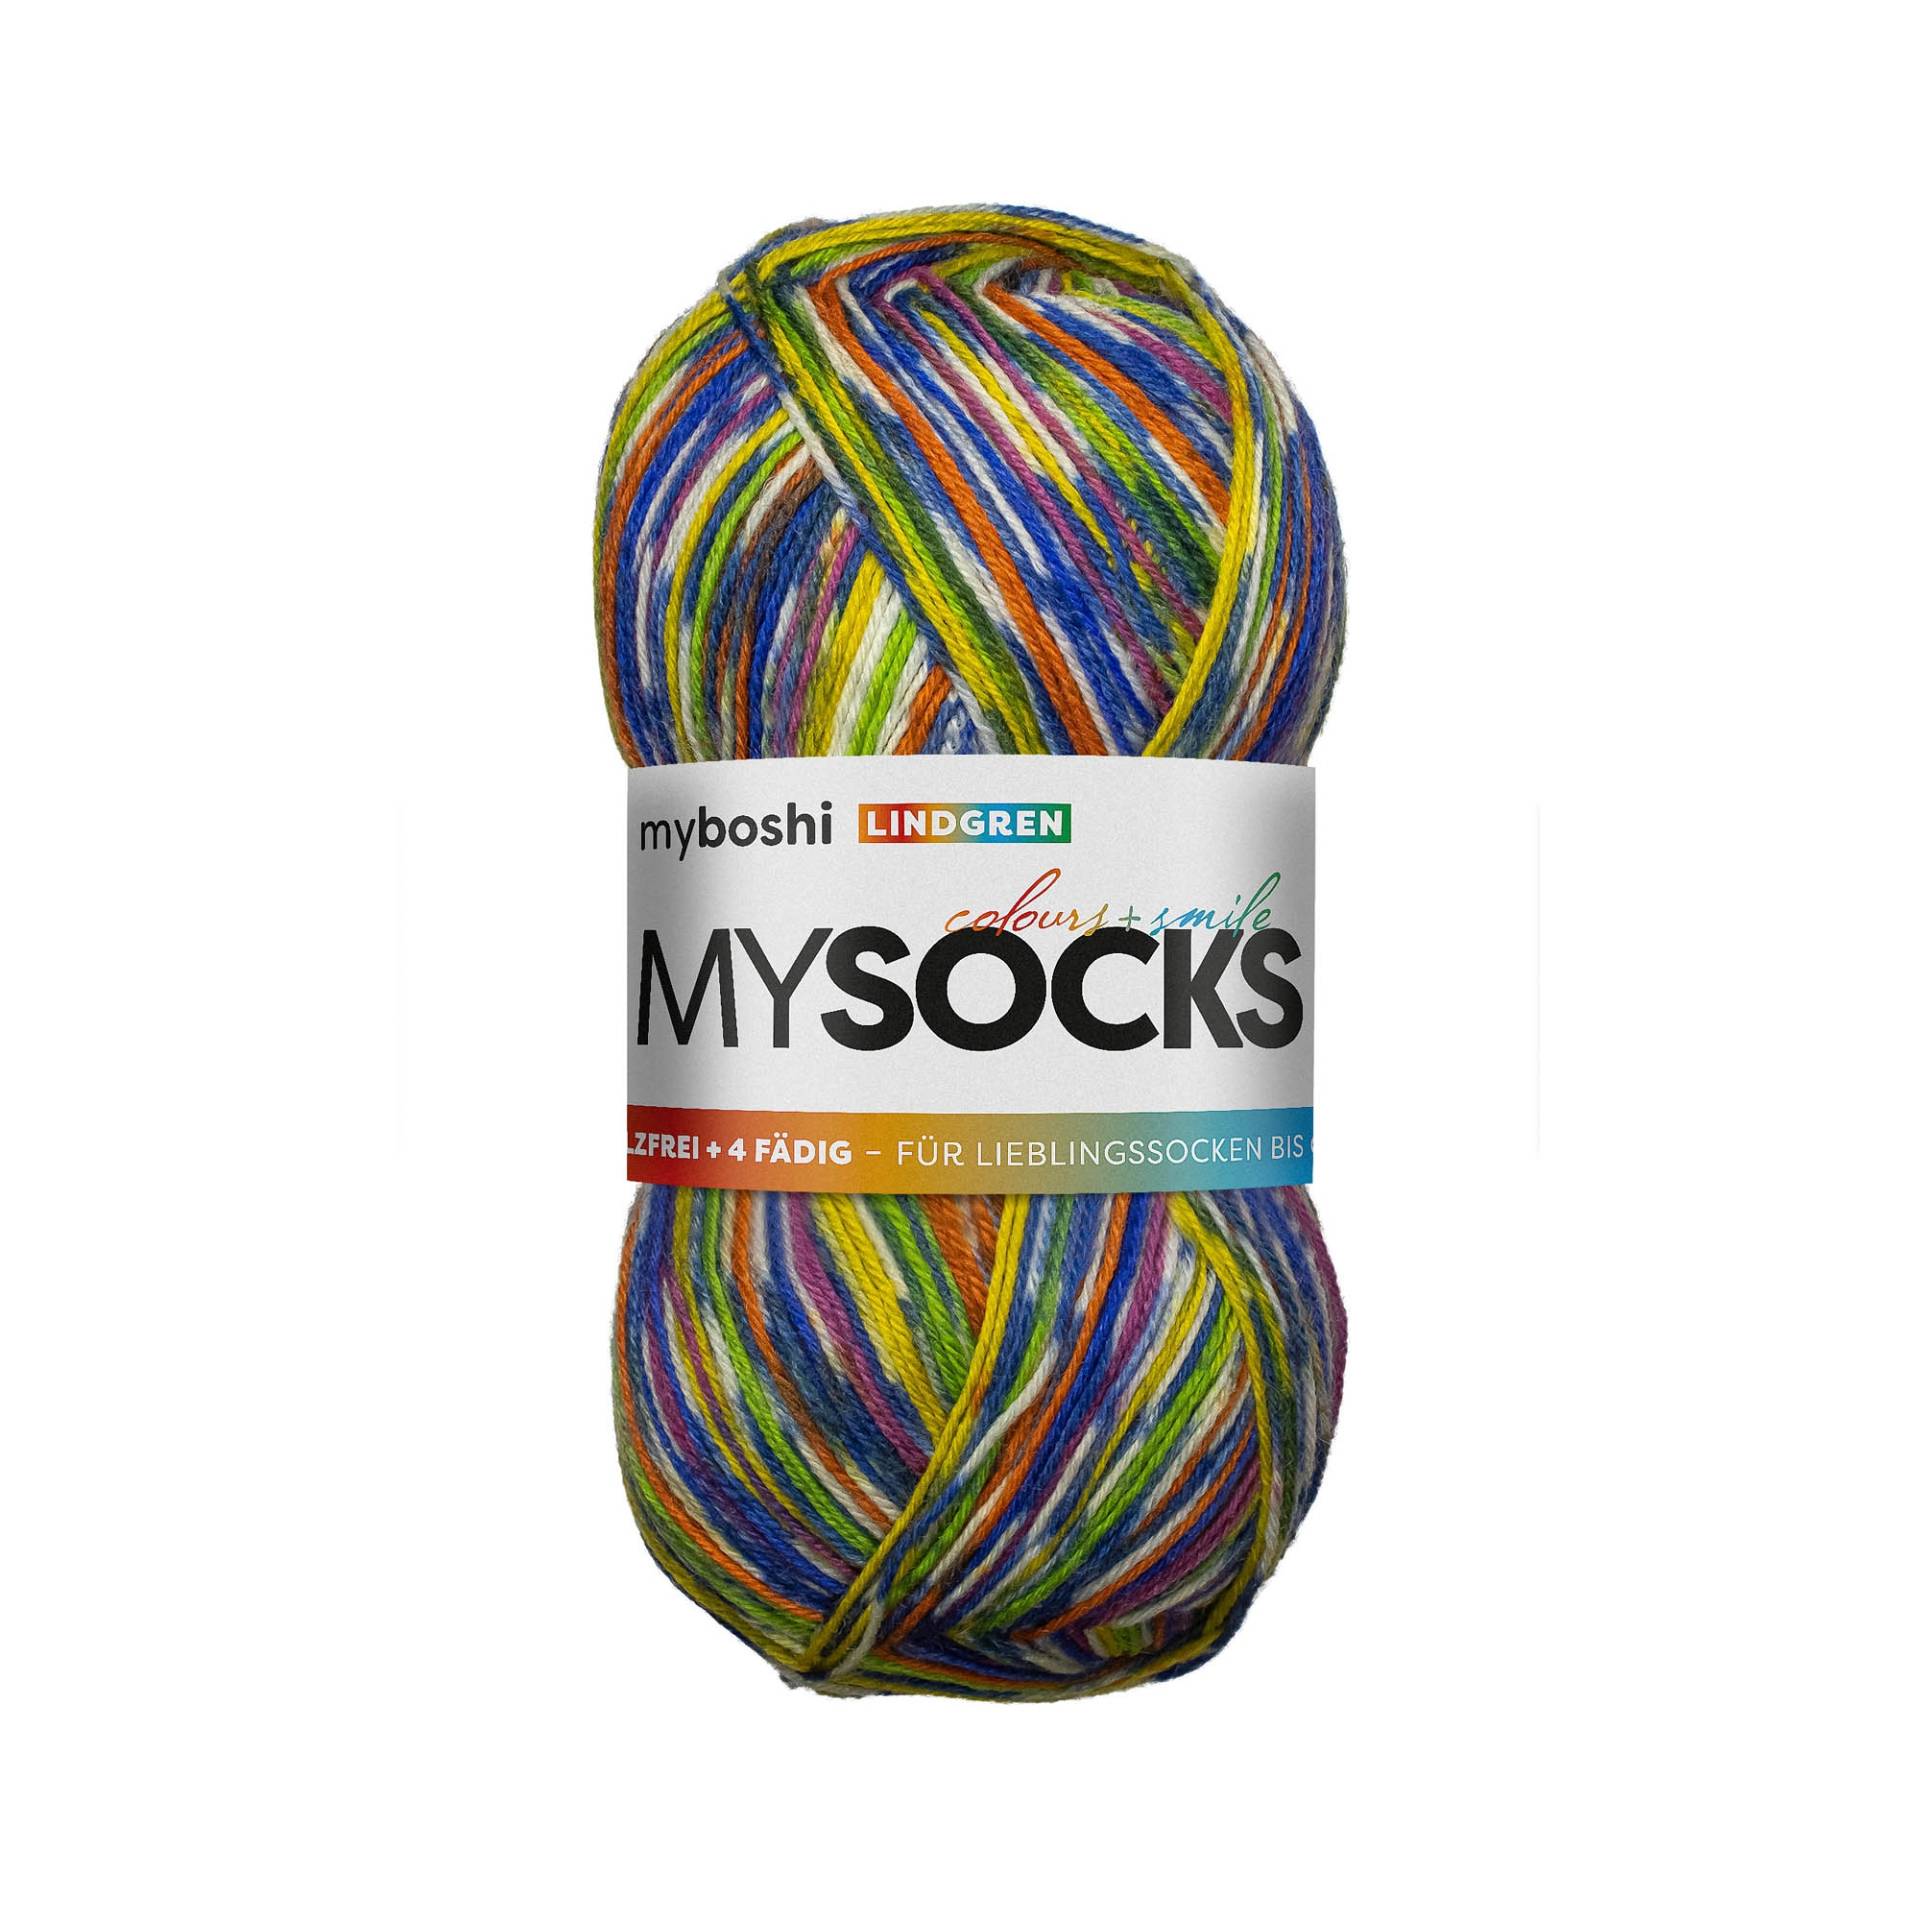 myboshi mysocks 4-fädige Sockenwolle Lindgren 100g, multicolor von Stoffe Hemmers